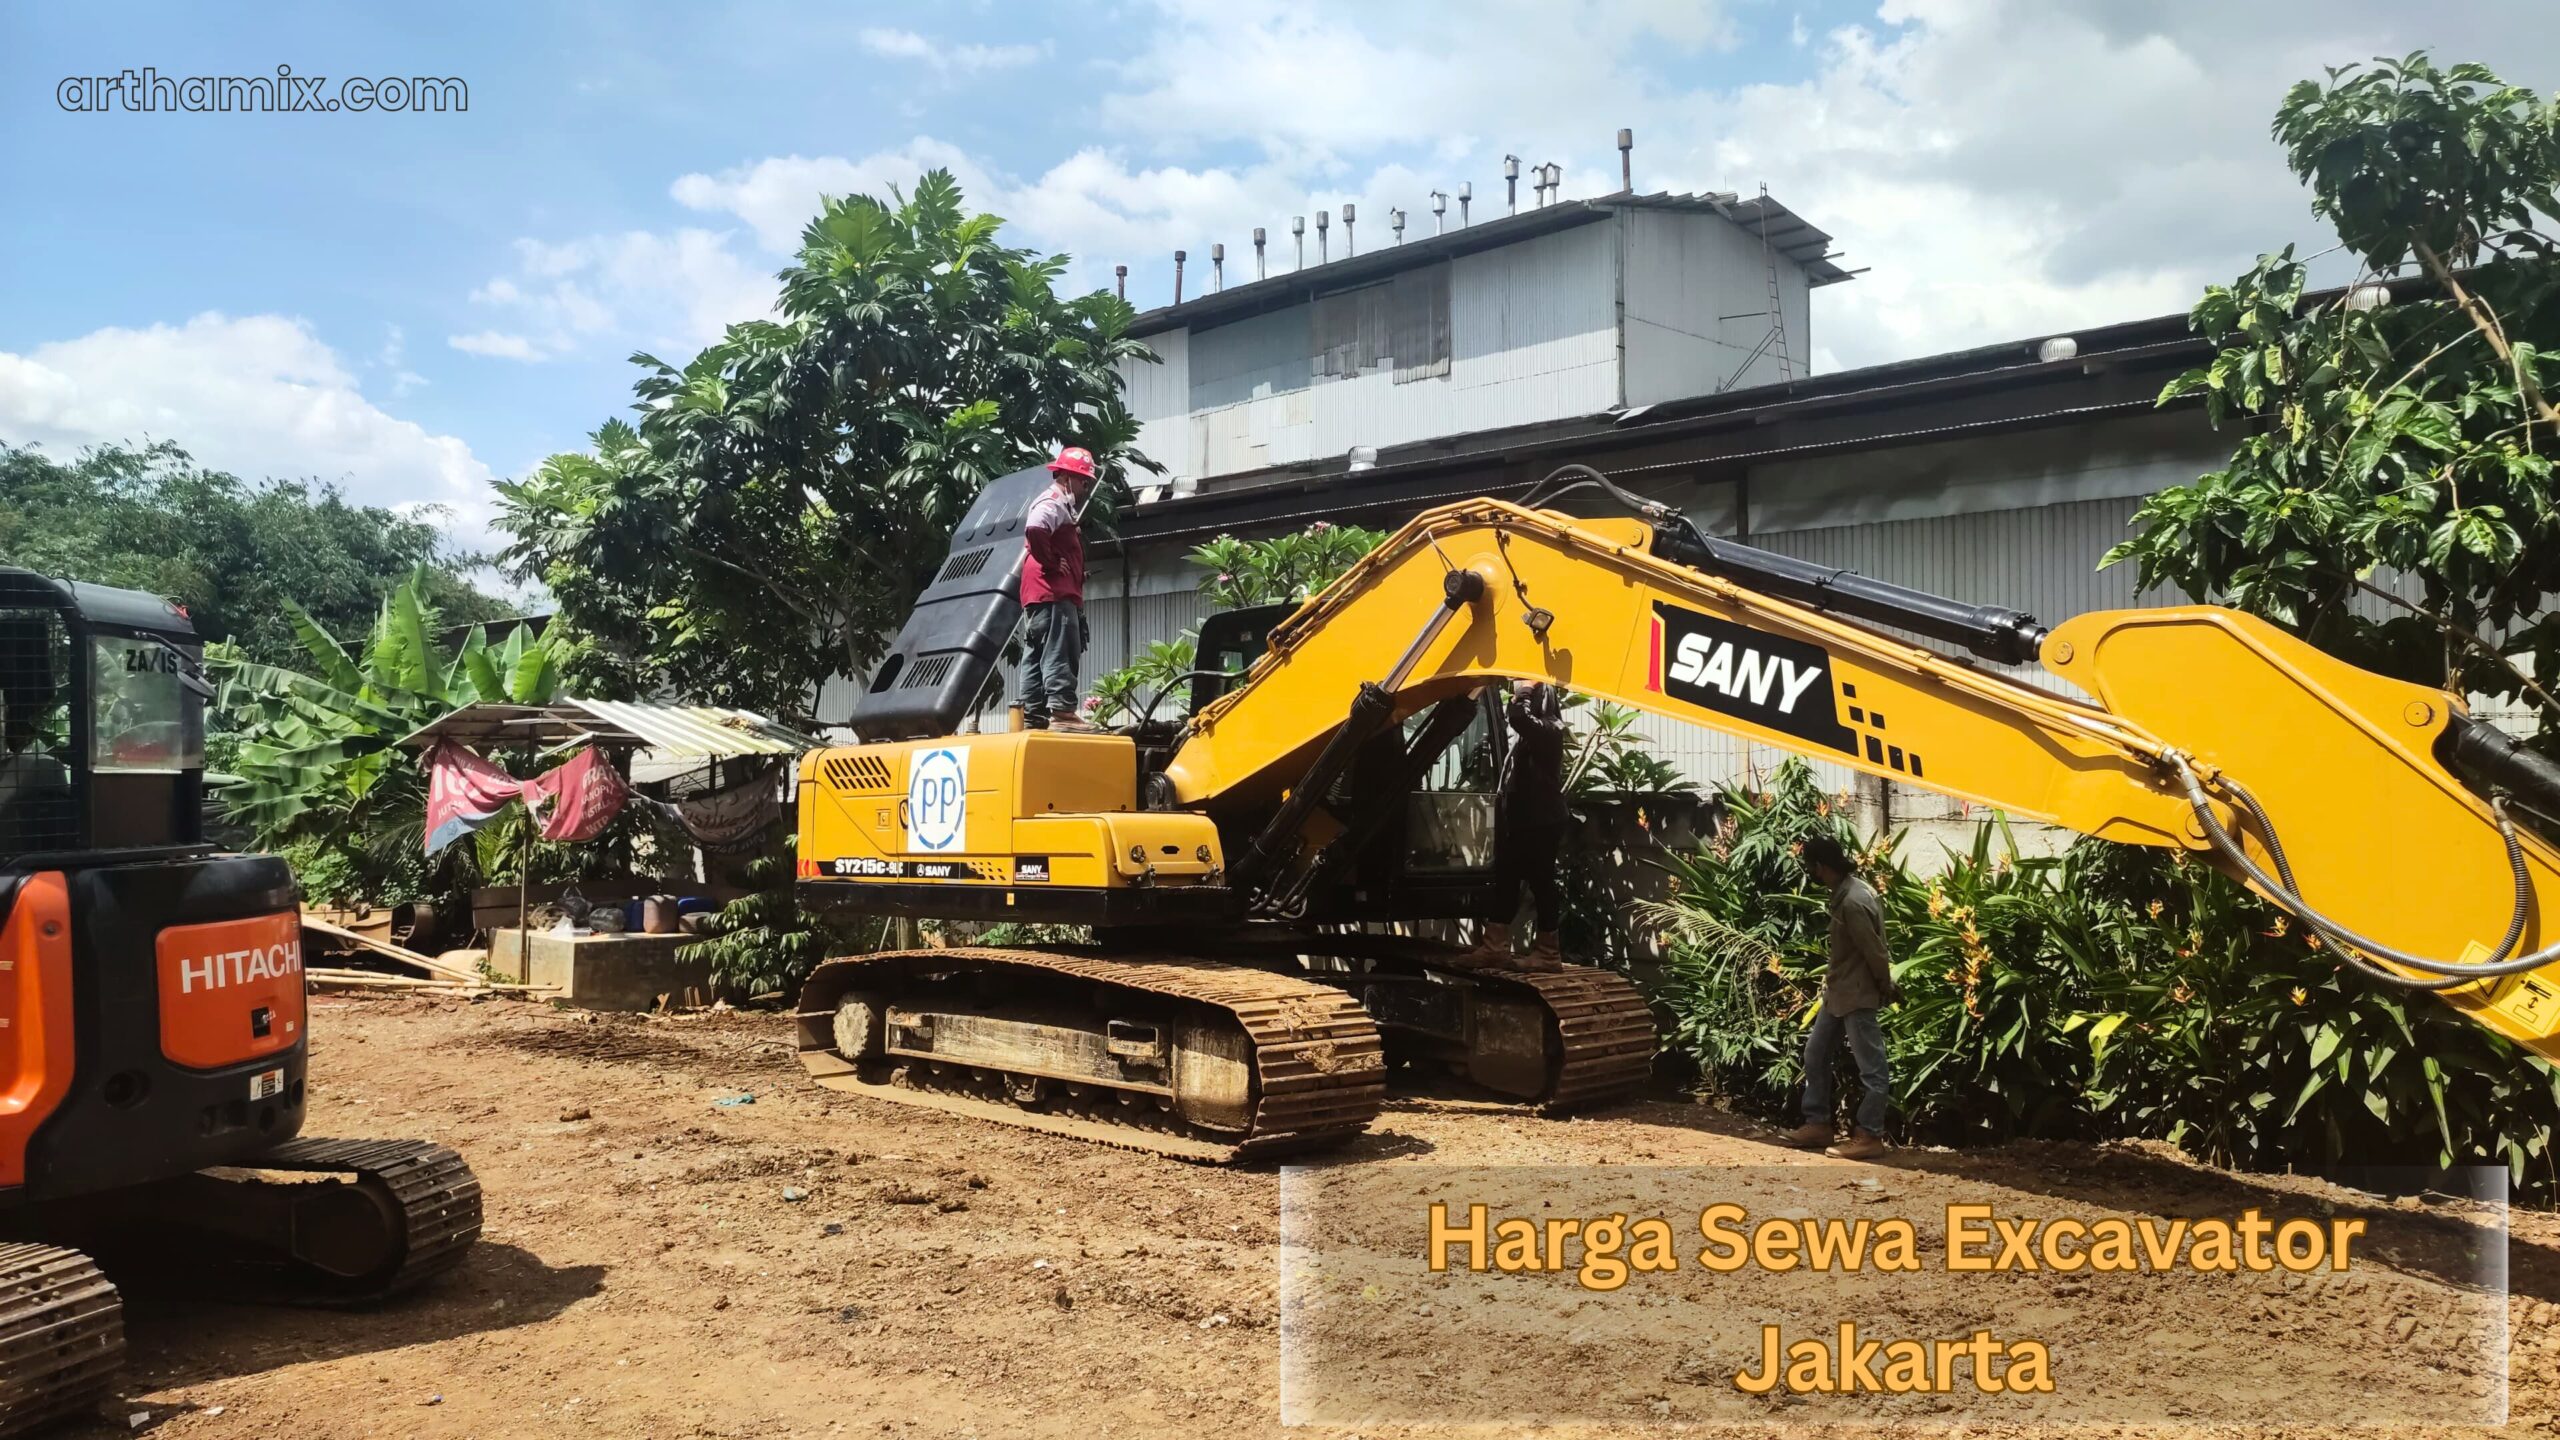 Harga Sewa Excavator Jakarta terbaru